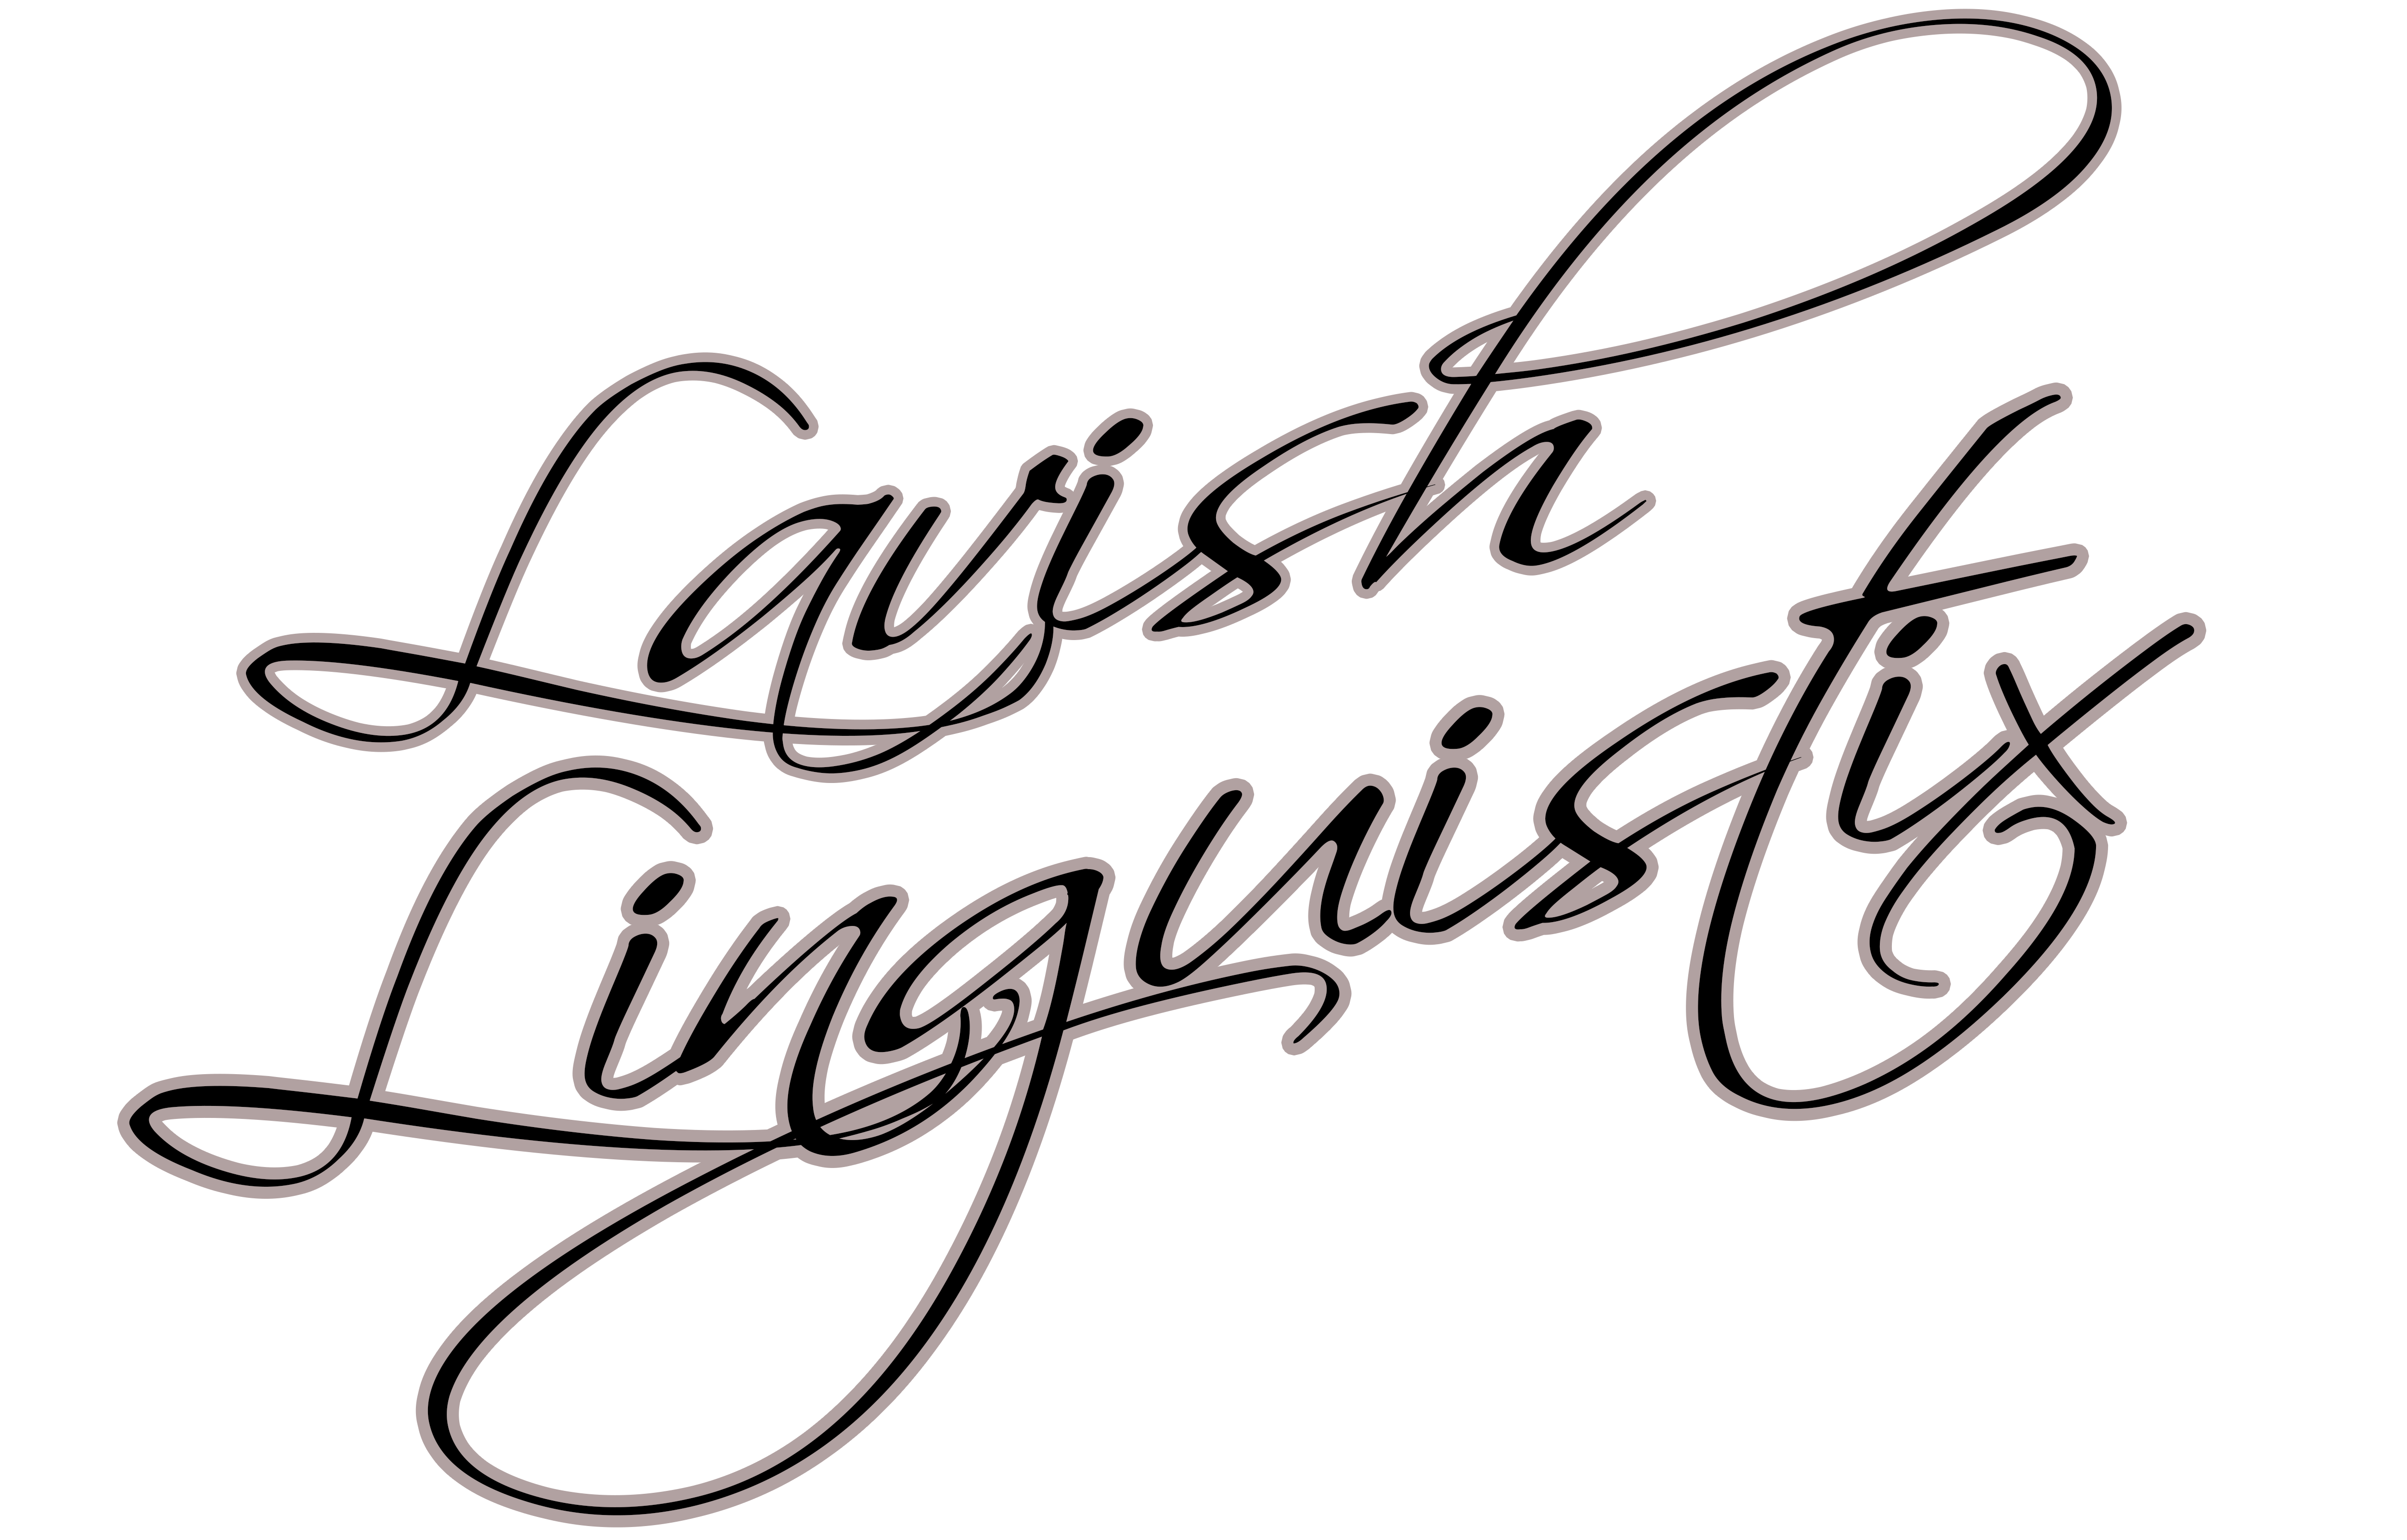 Lavish Linguistix™ :: Where The Words Are Written